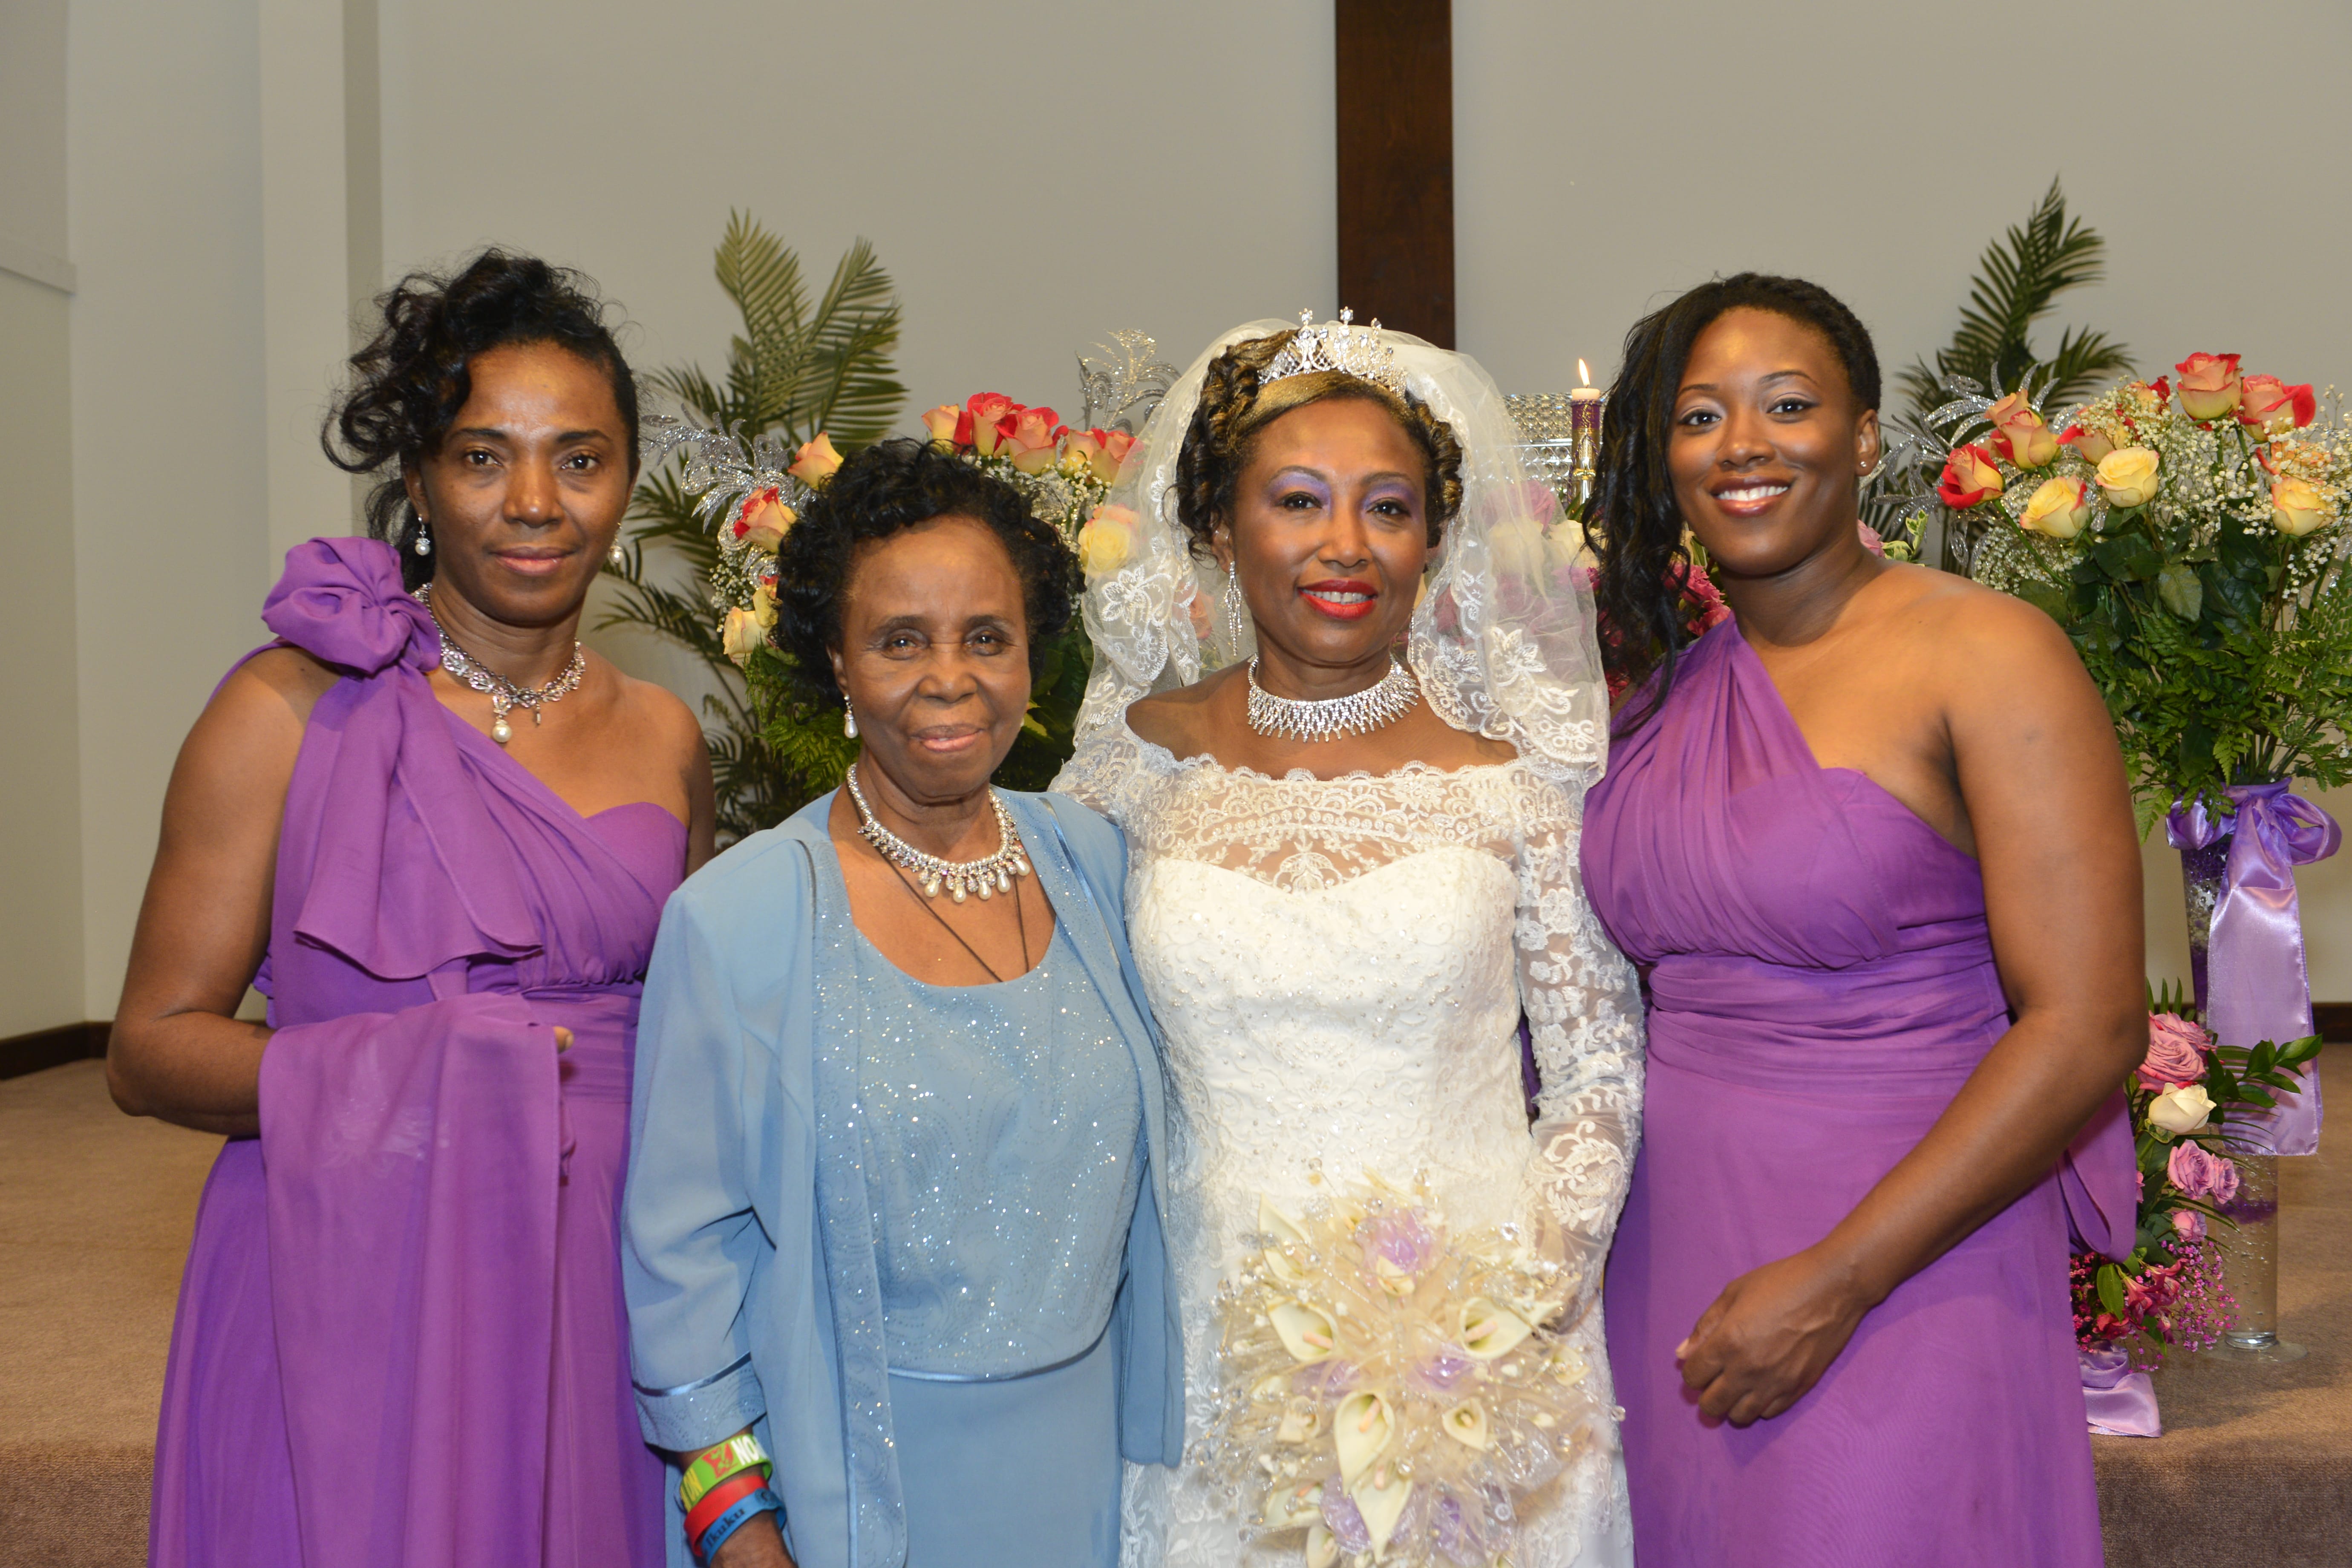 Dr. & Dr. Mrs. Ugwu’s 39th Anniversary Reception – Houston, Texas